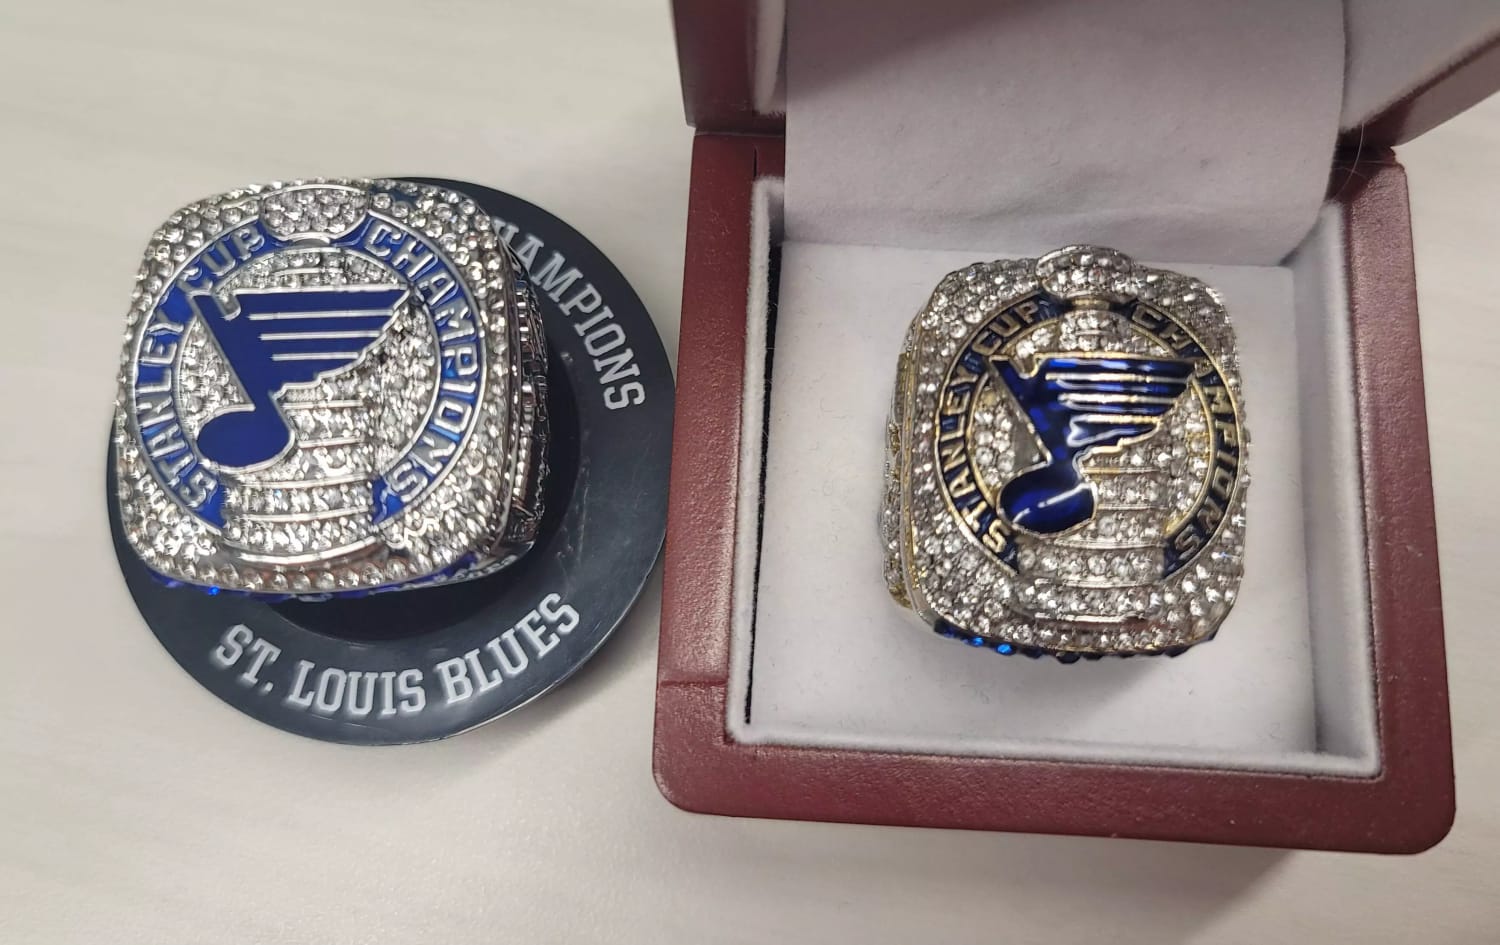 Blues Stanley Cup ring SGA (left) vs DHGate replica (right)